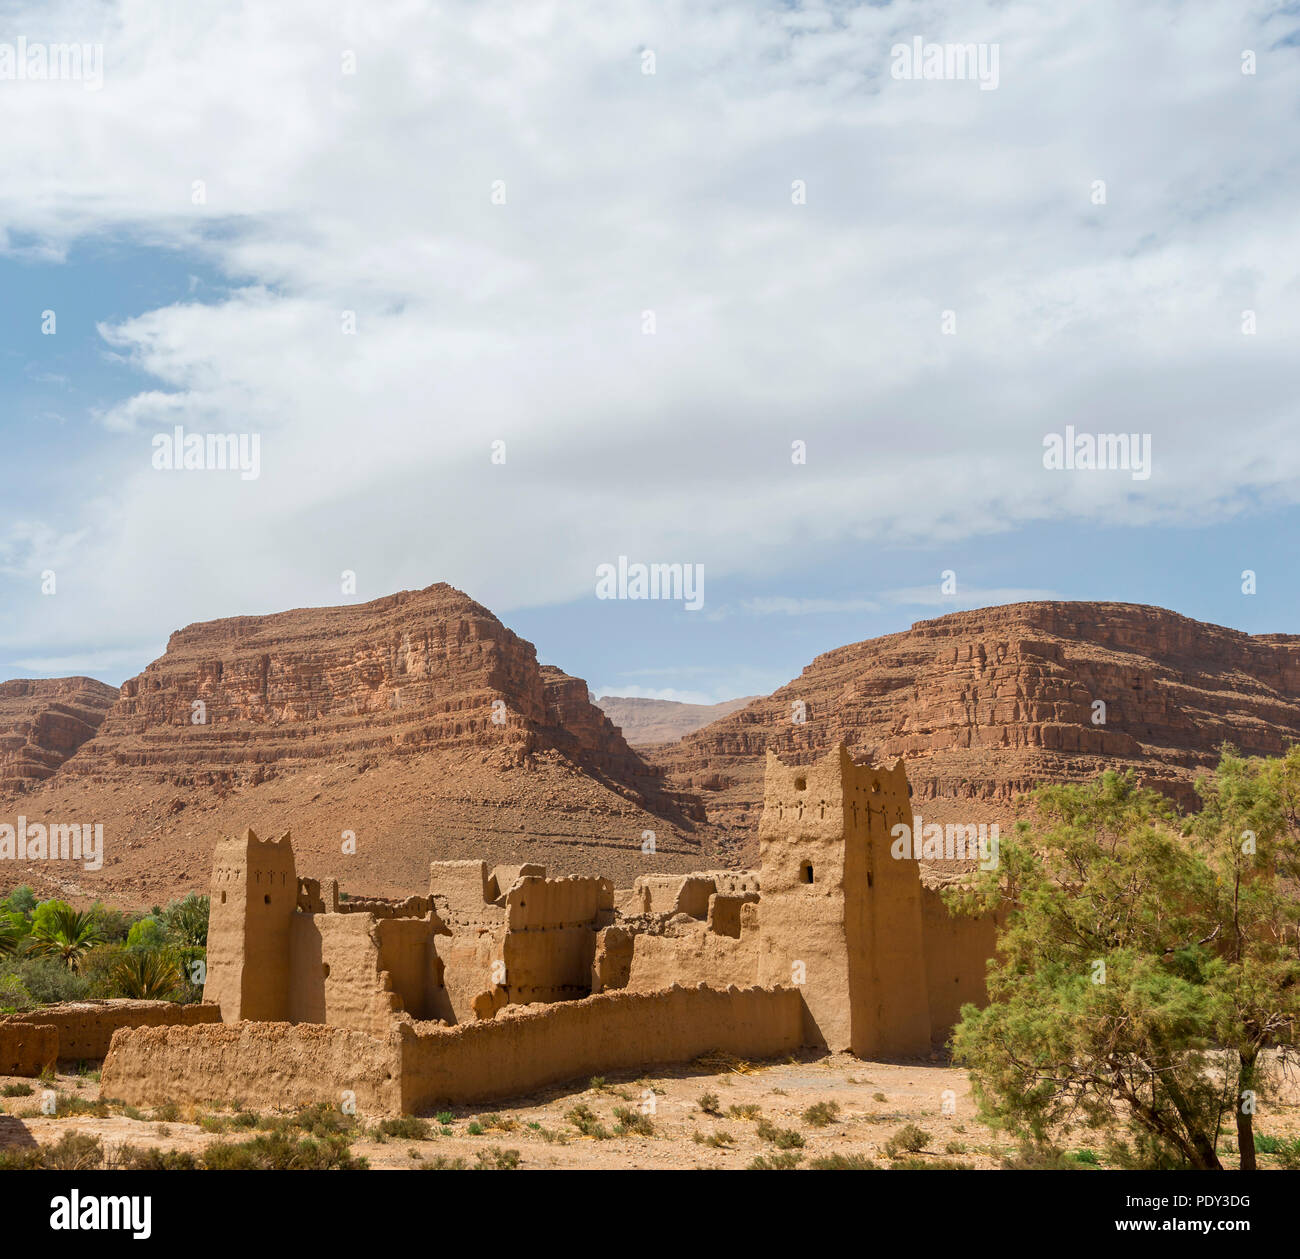 Verfallenen Stadt, einer alten Kasbah vor der Sandsteinfelsen Ruine, Oase am Fleuve de Ziz, Marokko Stockfoto